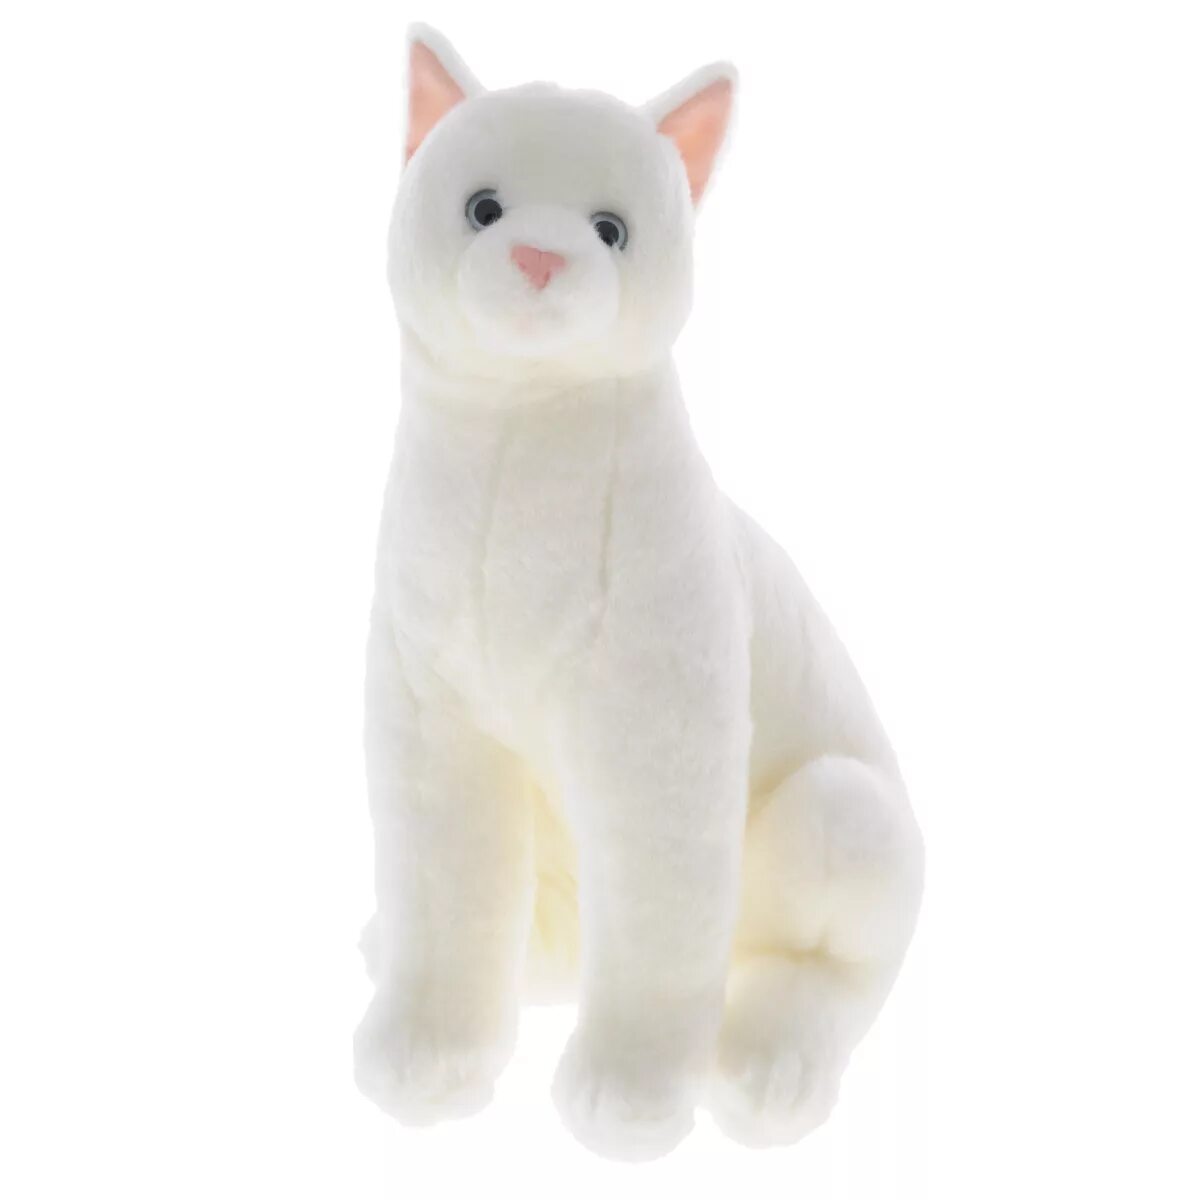 Игрушки Gulliver белая кошка. Кот белый белый Gulliver. Мягкая игрушка котик белый. Мягкая игрушка кошка белая. Где купить игрушку кот